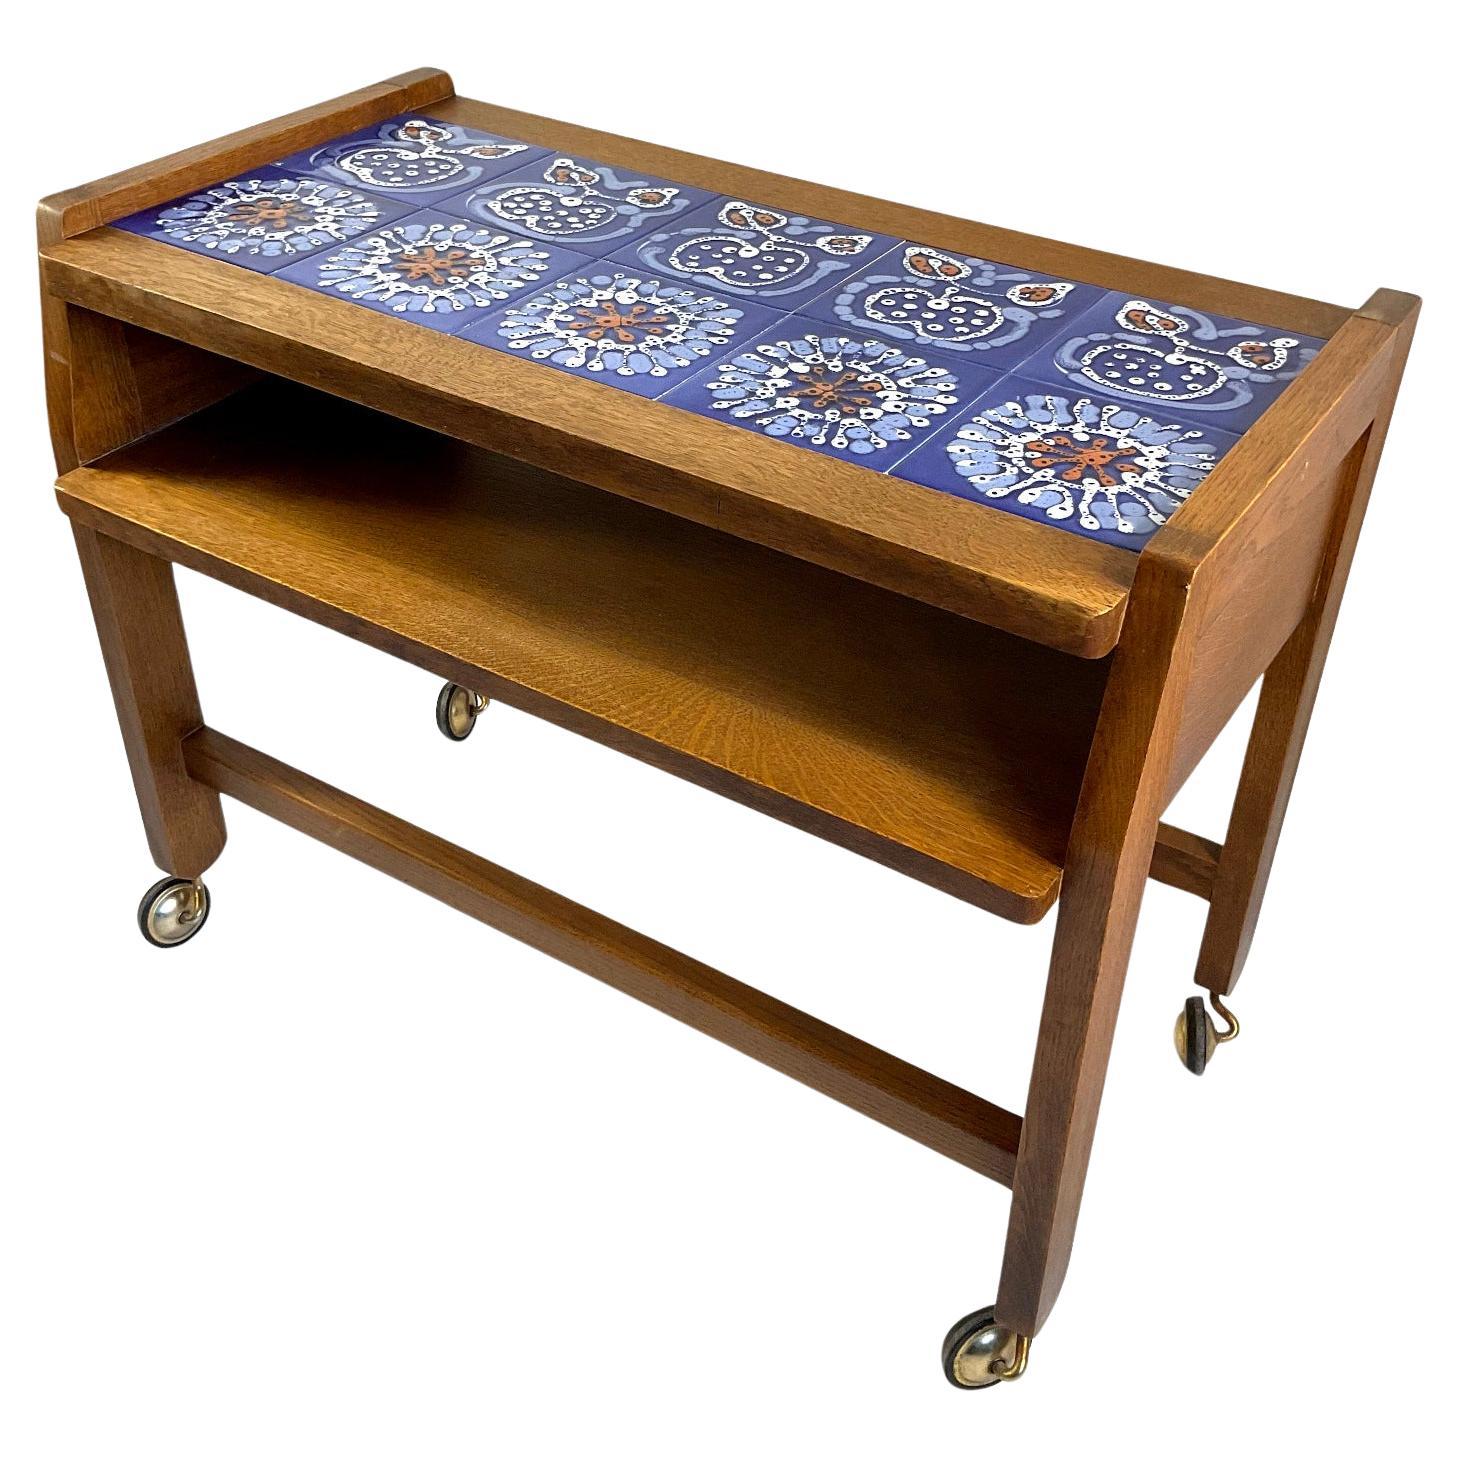 1960s Guillerme et Chambron Oak Side Table with Blue Ceramics Tiles Top For Sale